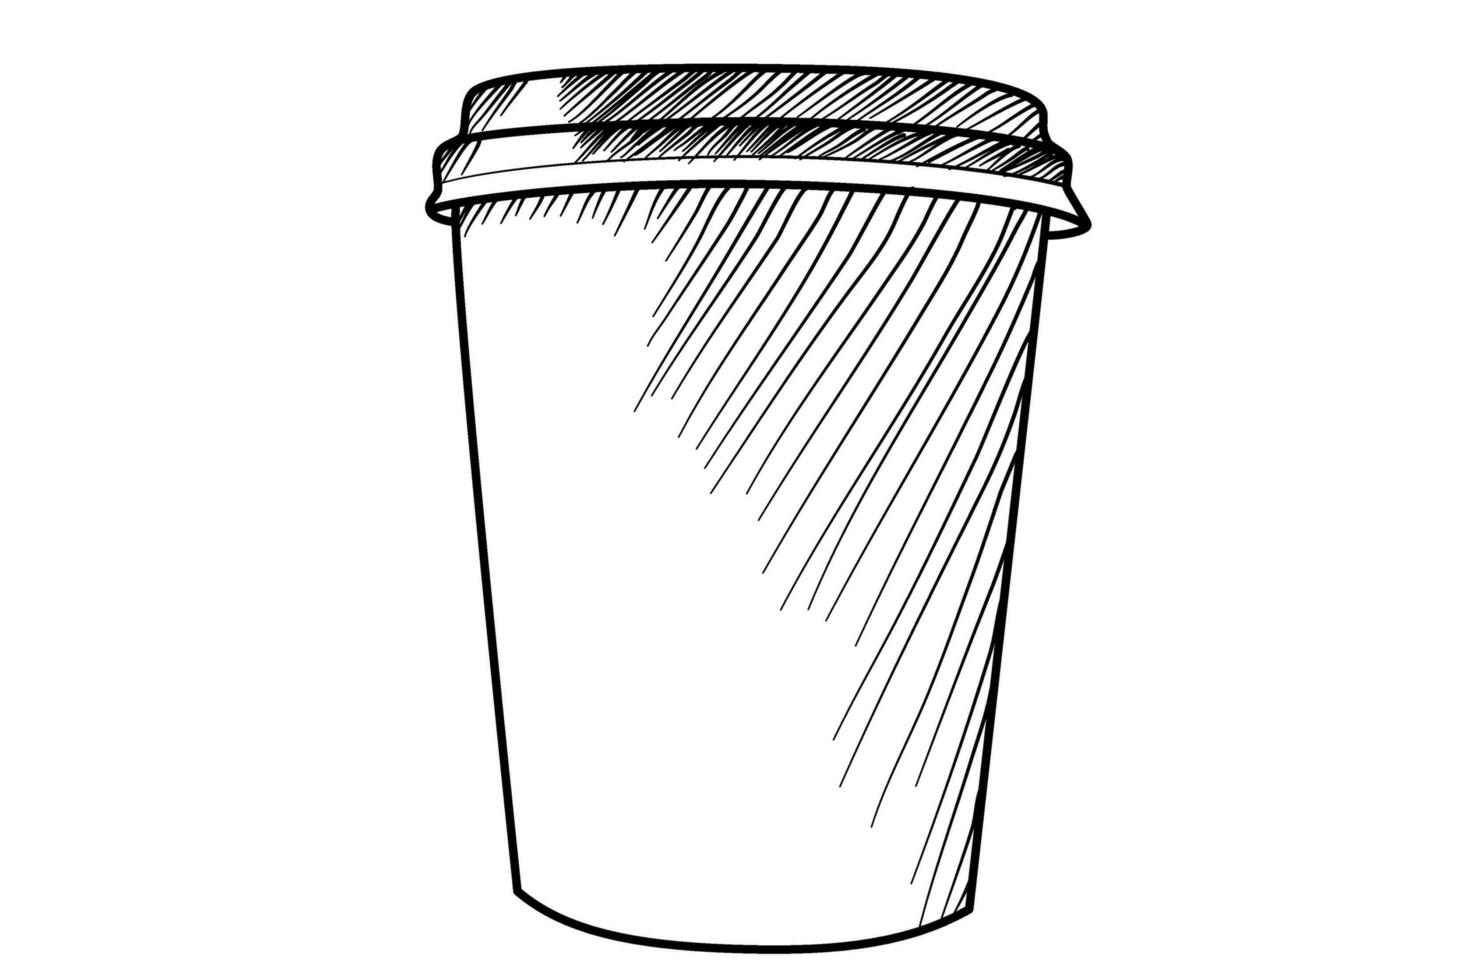 café tasse ligne art haricot boisson illustration vecteur